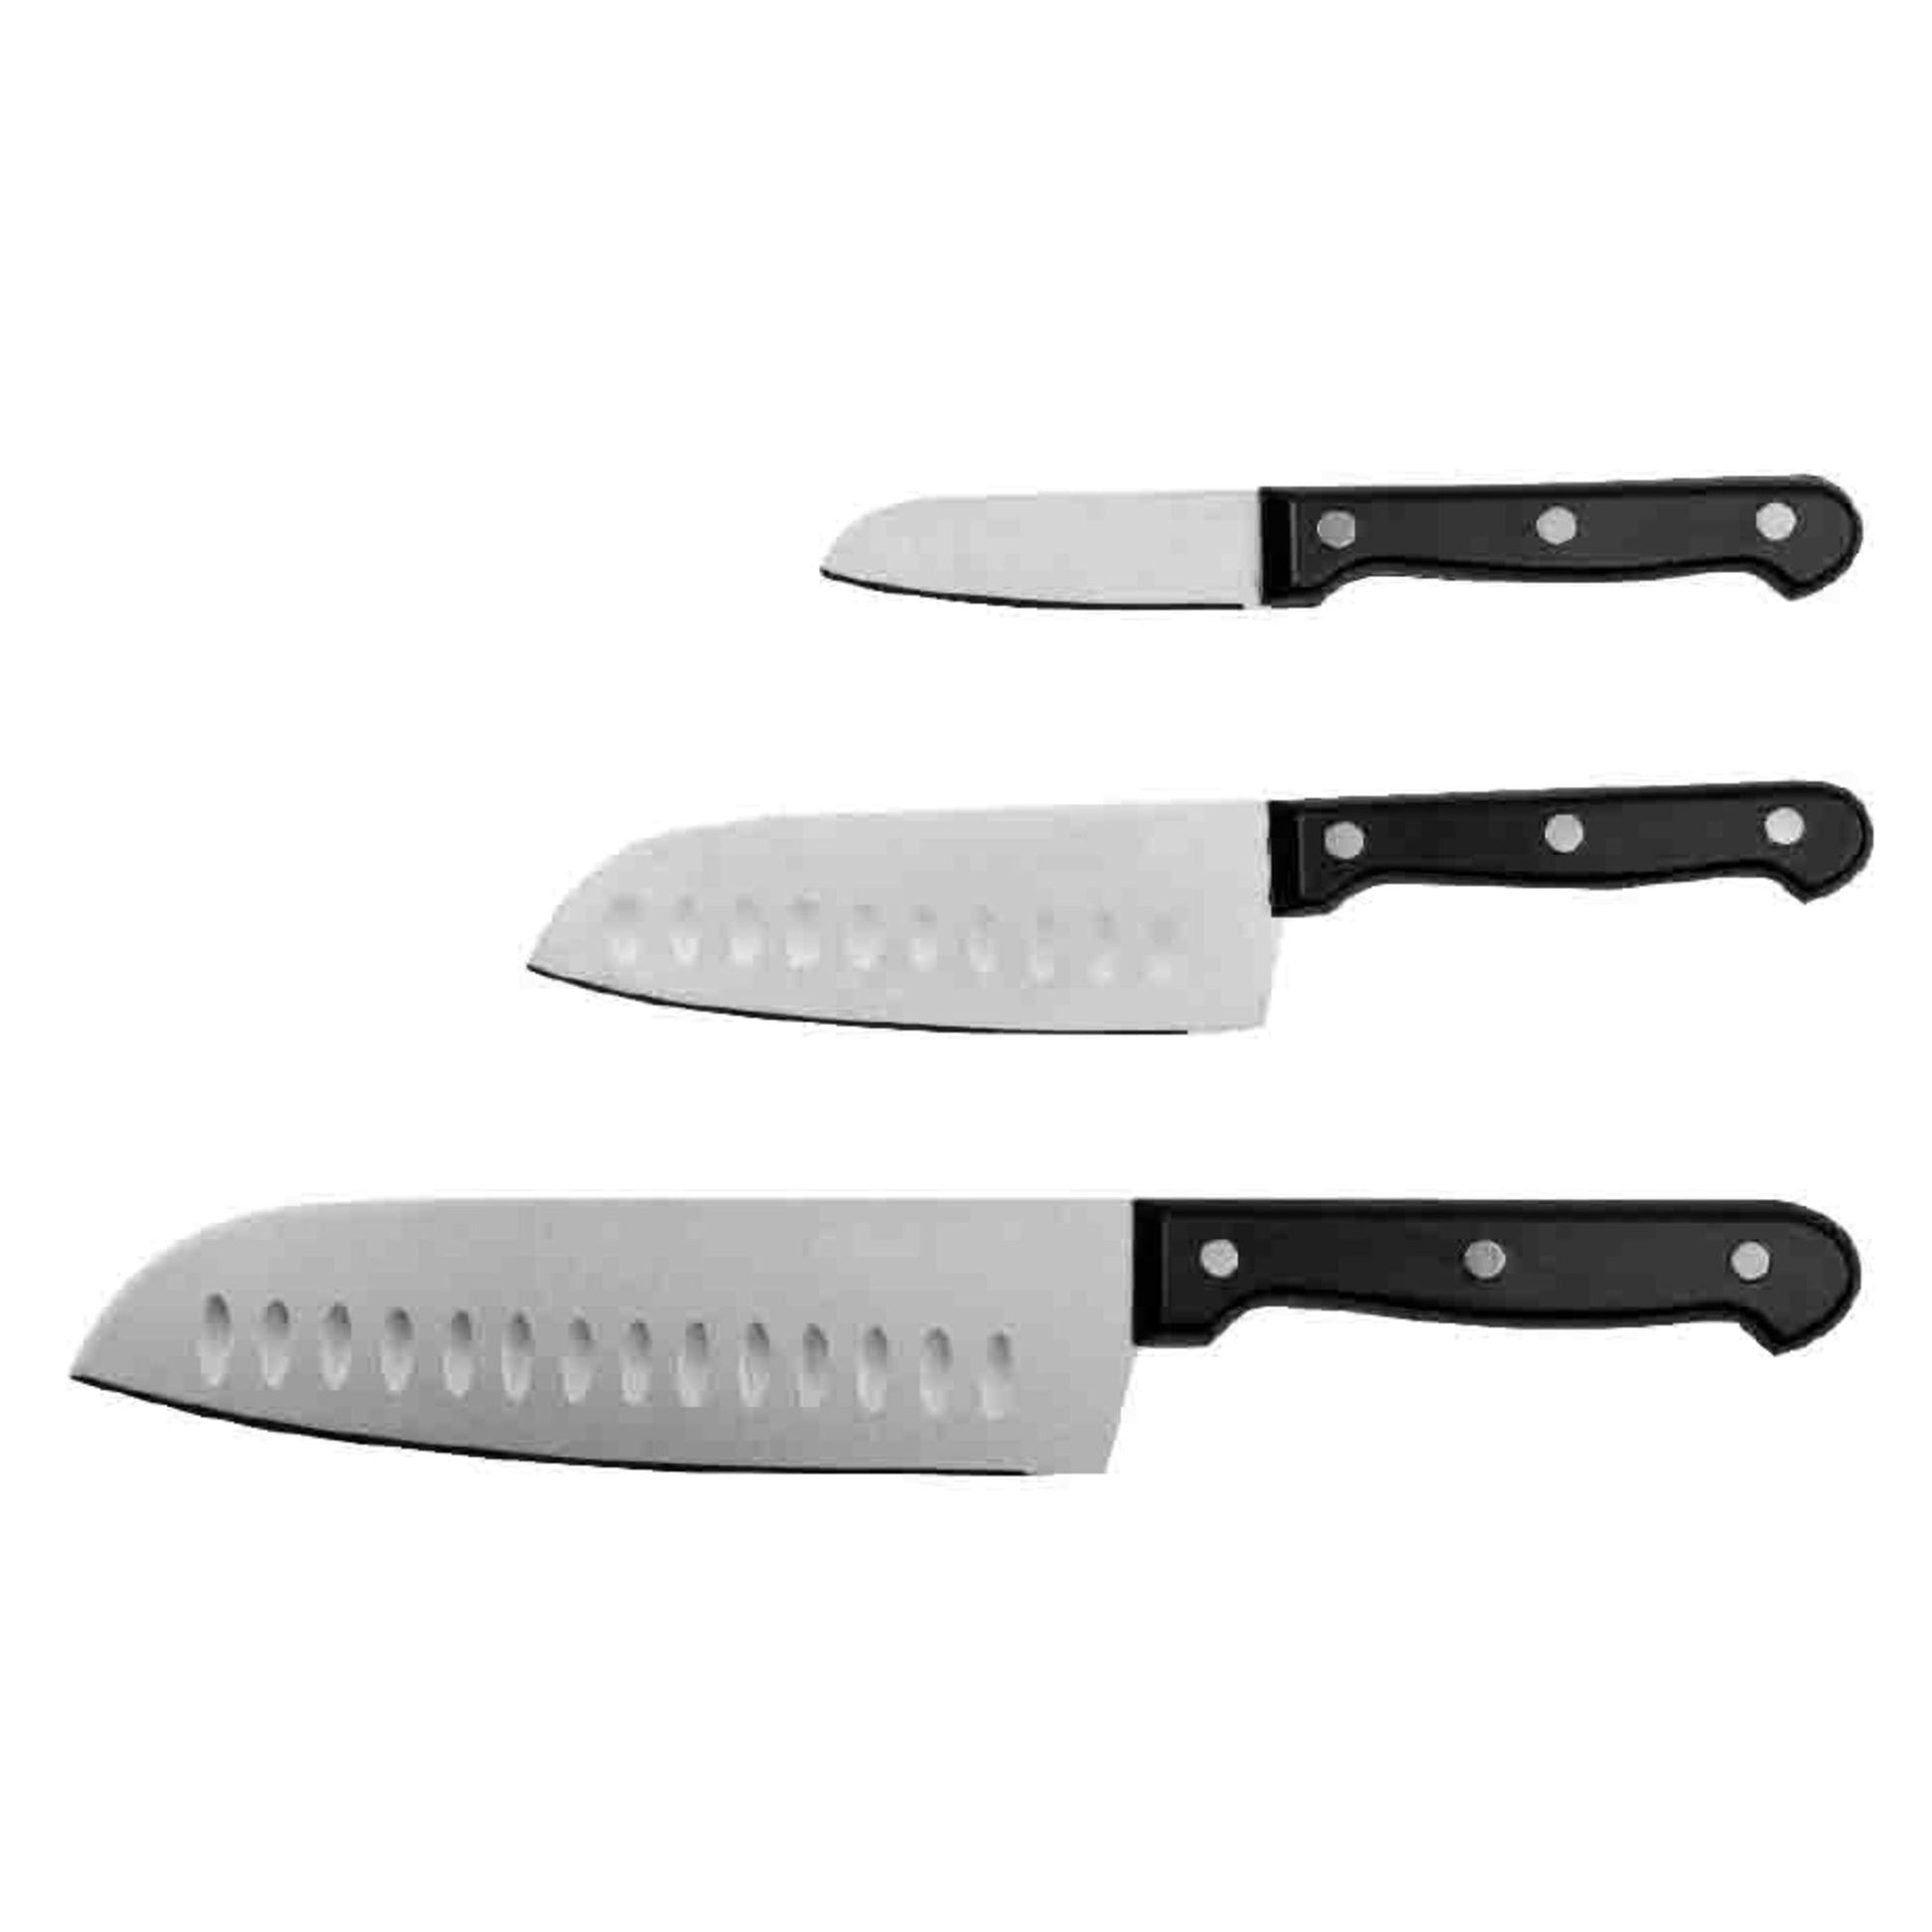 Home Basics 3 Piece Stainless Steel Santoku Knife Set, Black - Black